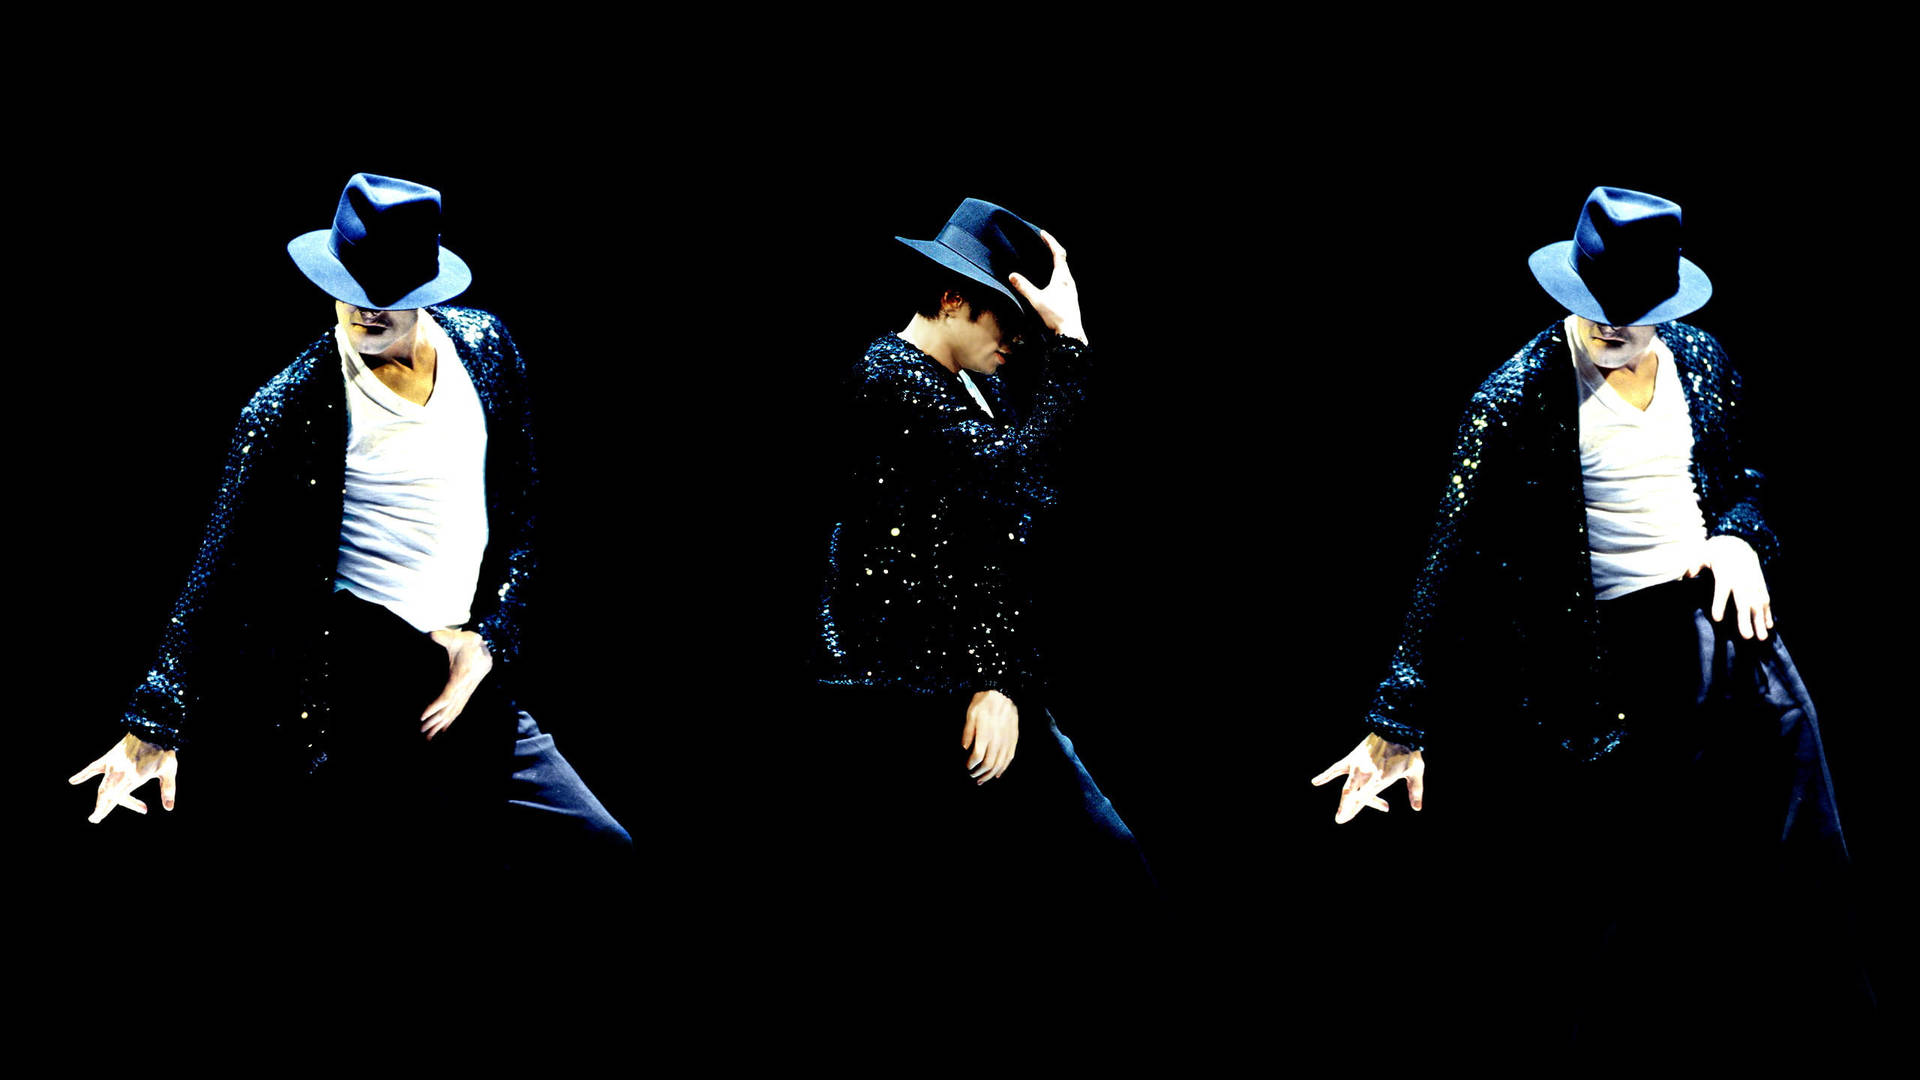 Michael Jackson Dance Moves Wallpaper